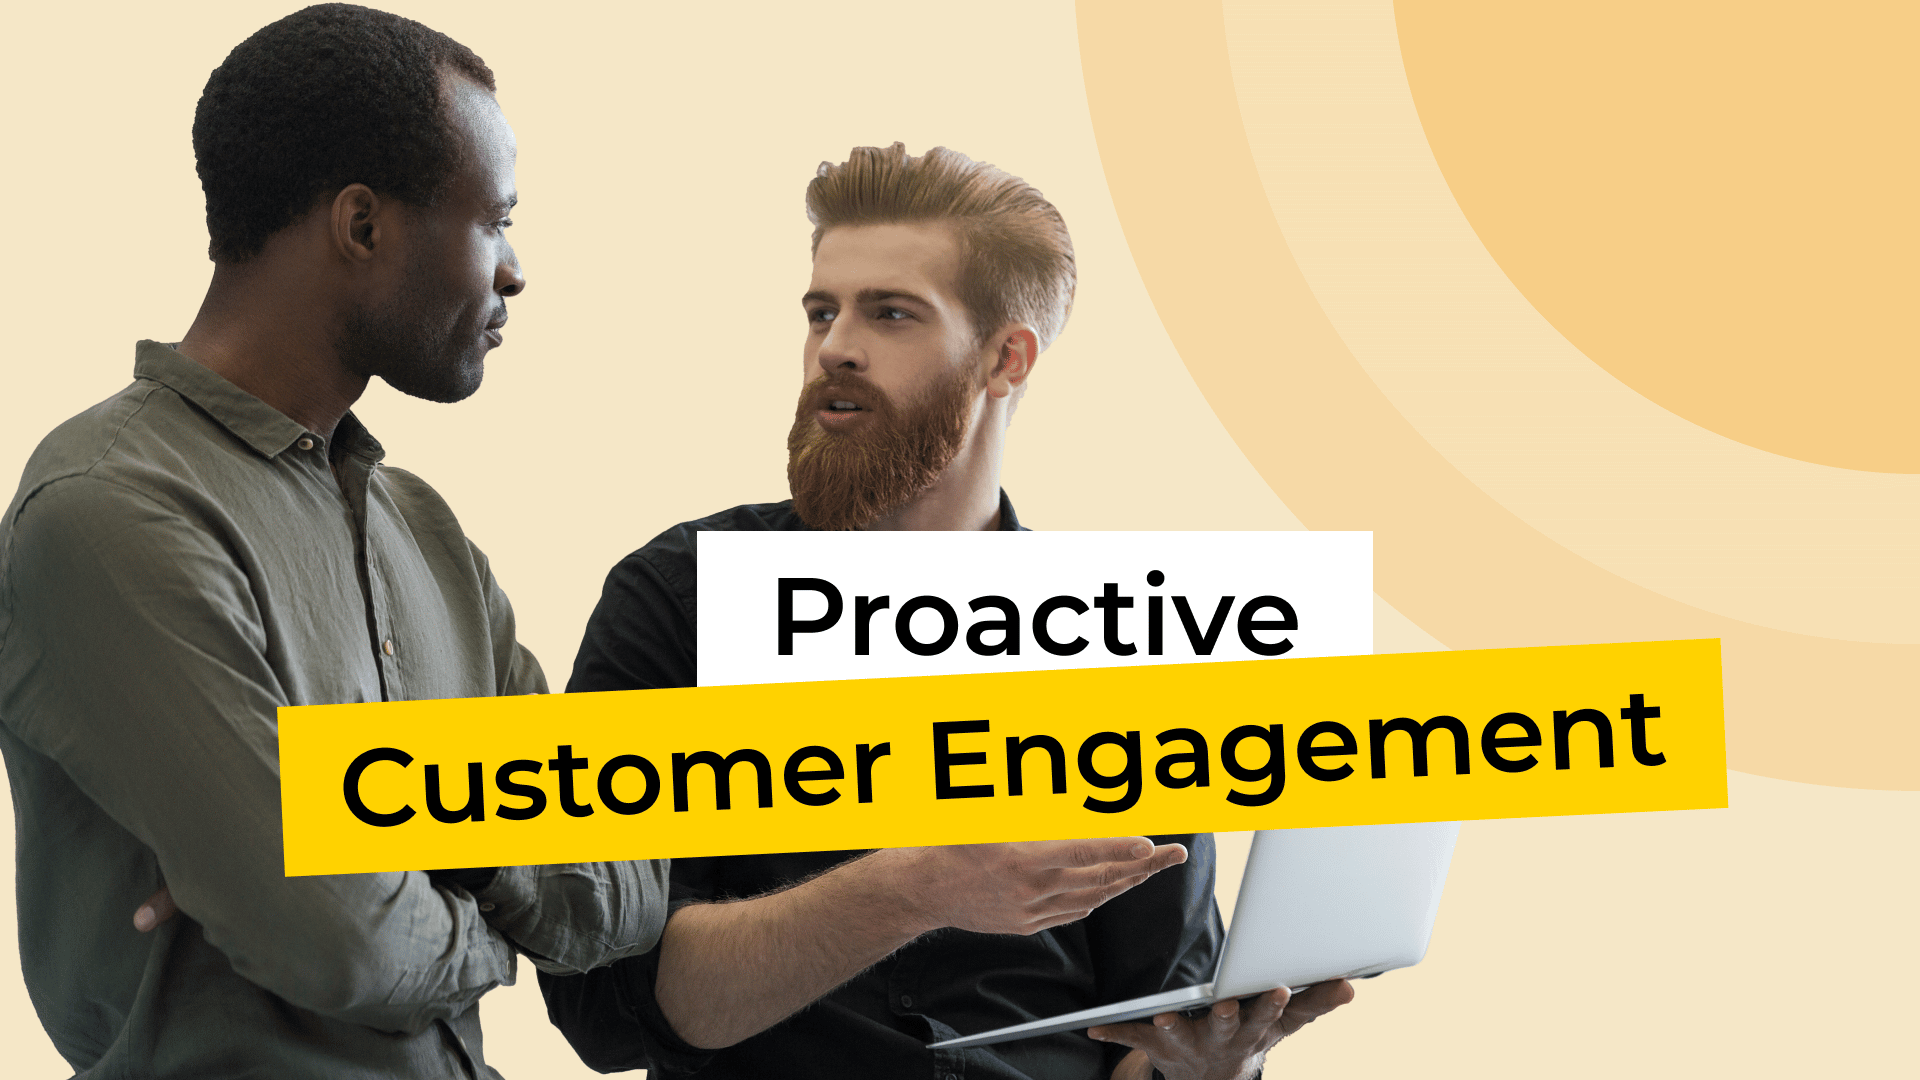 5 Ways to Enable Proactive Customer Engagement